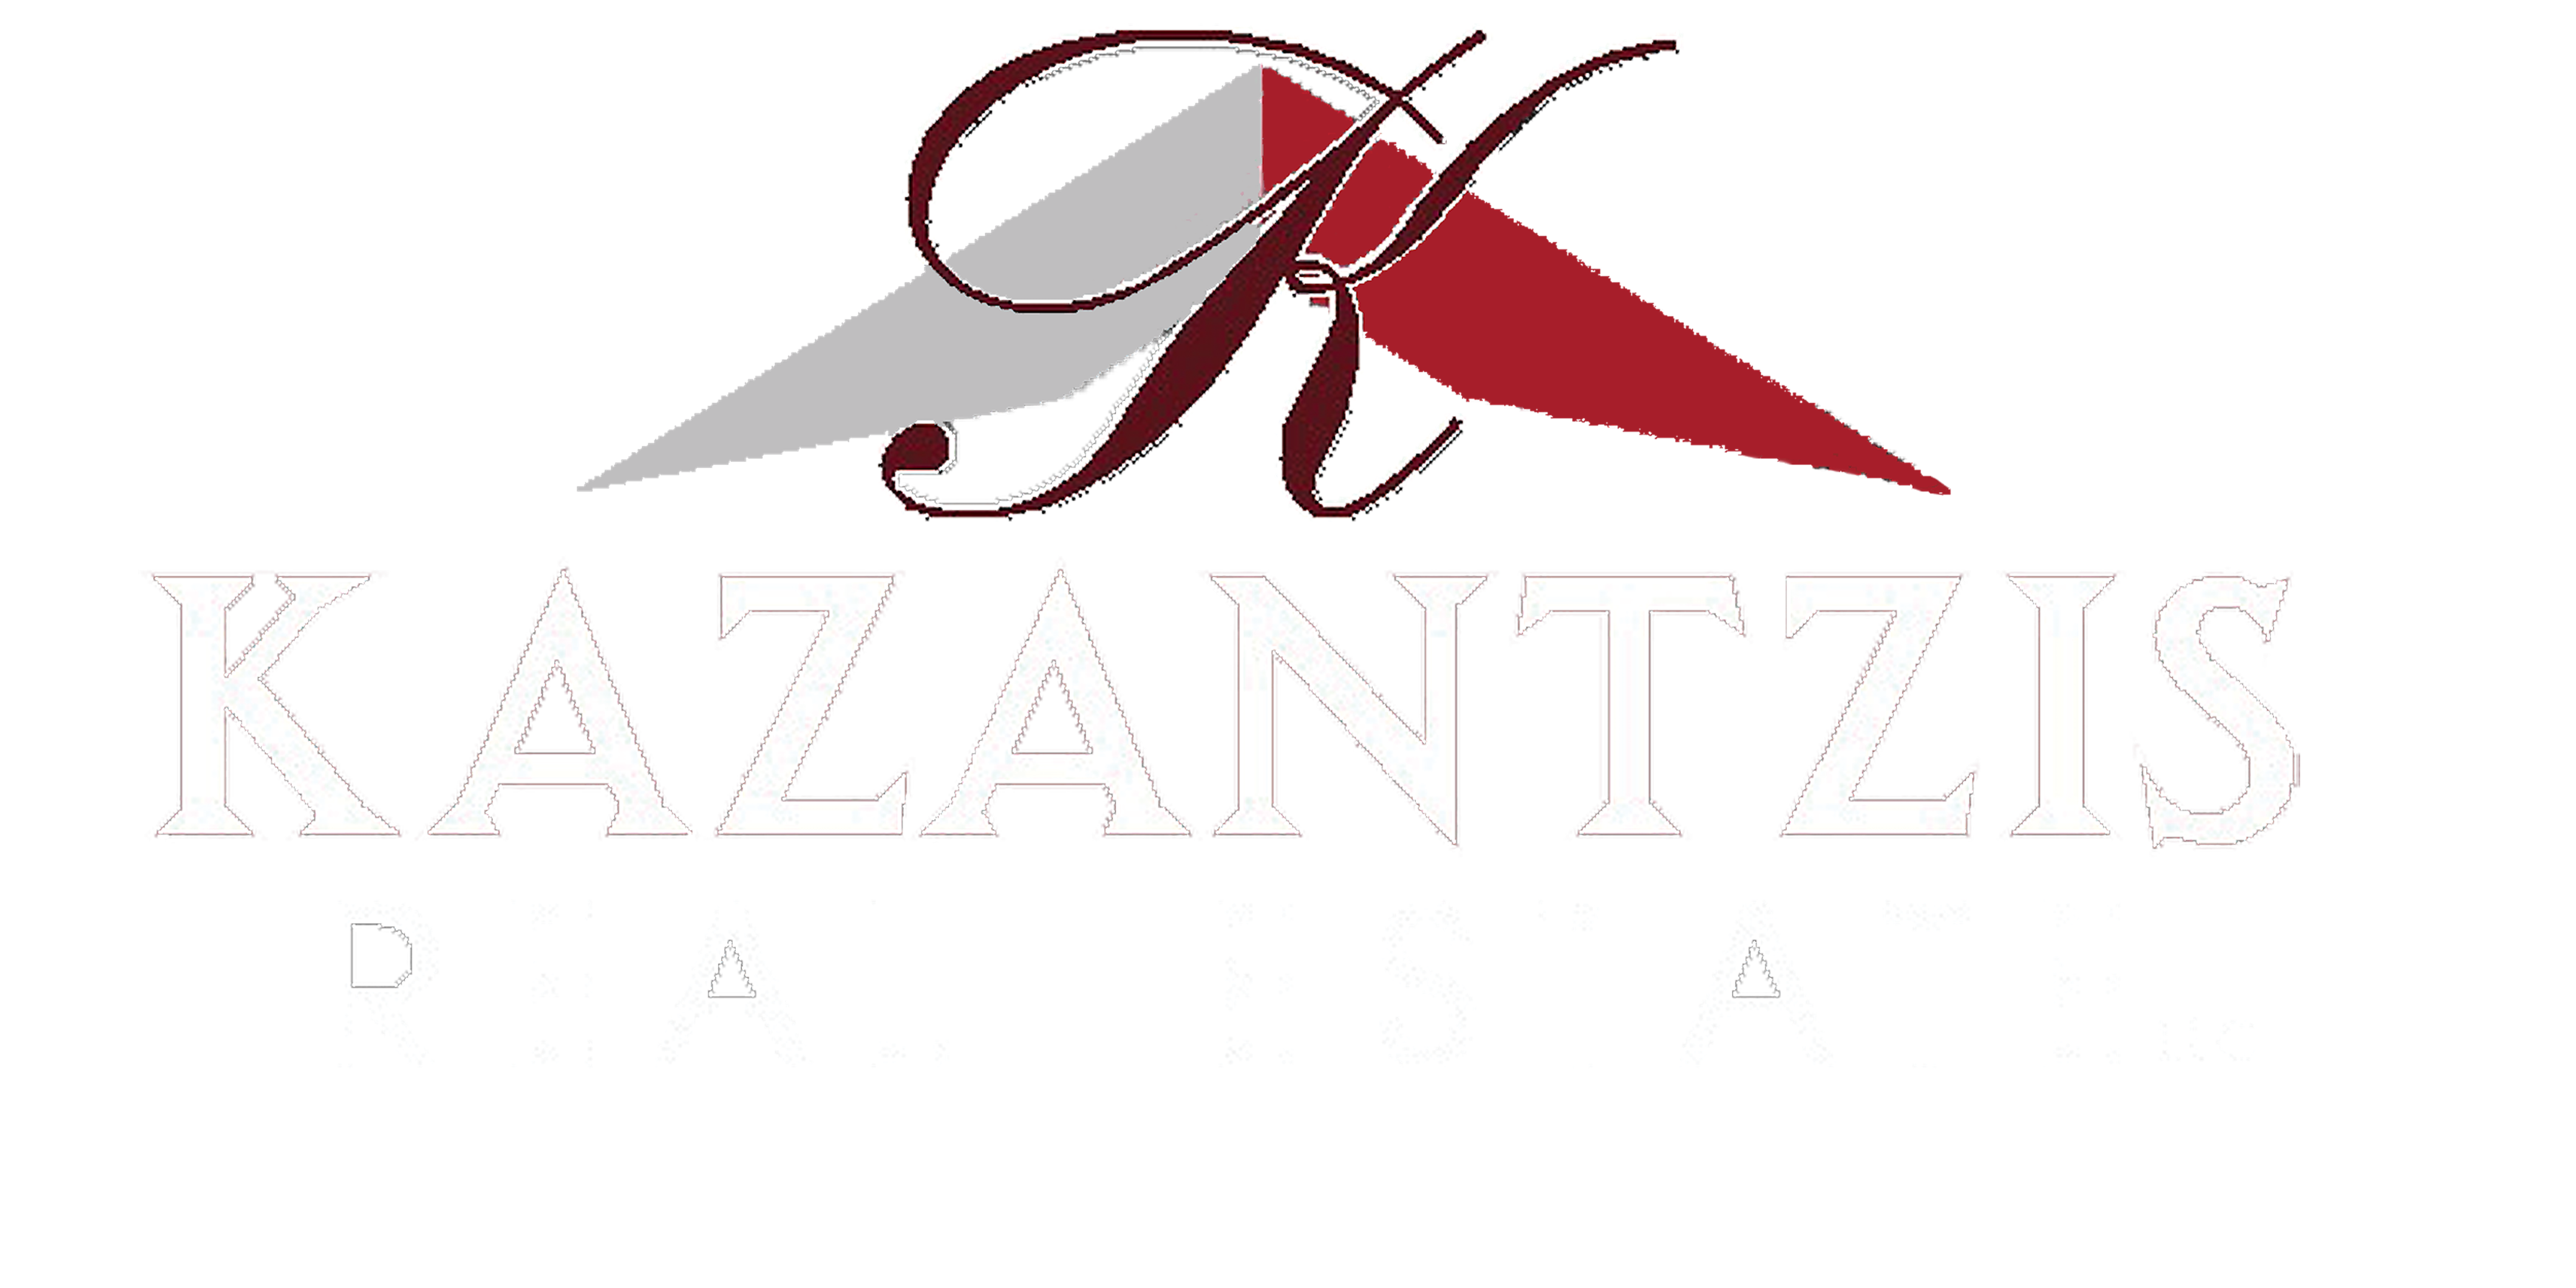 Kazantzis Real Estate, LLC